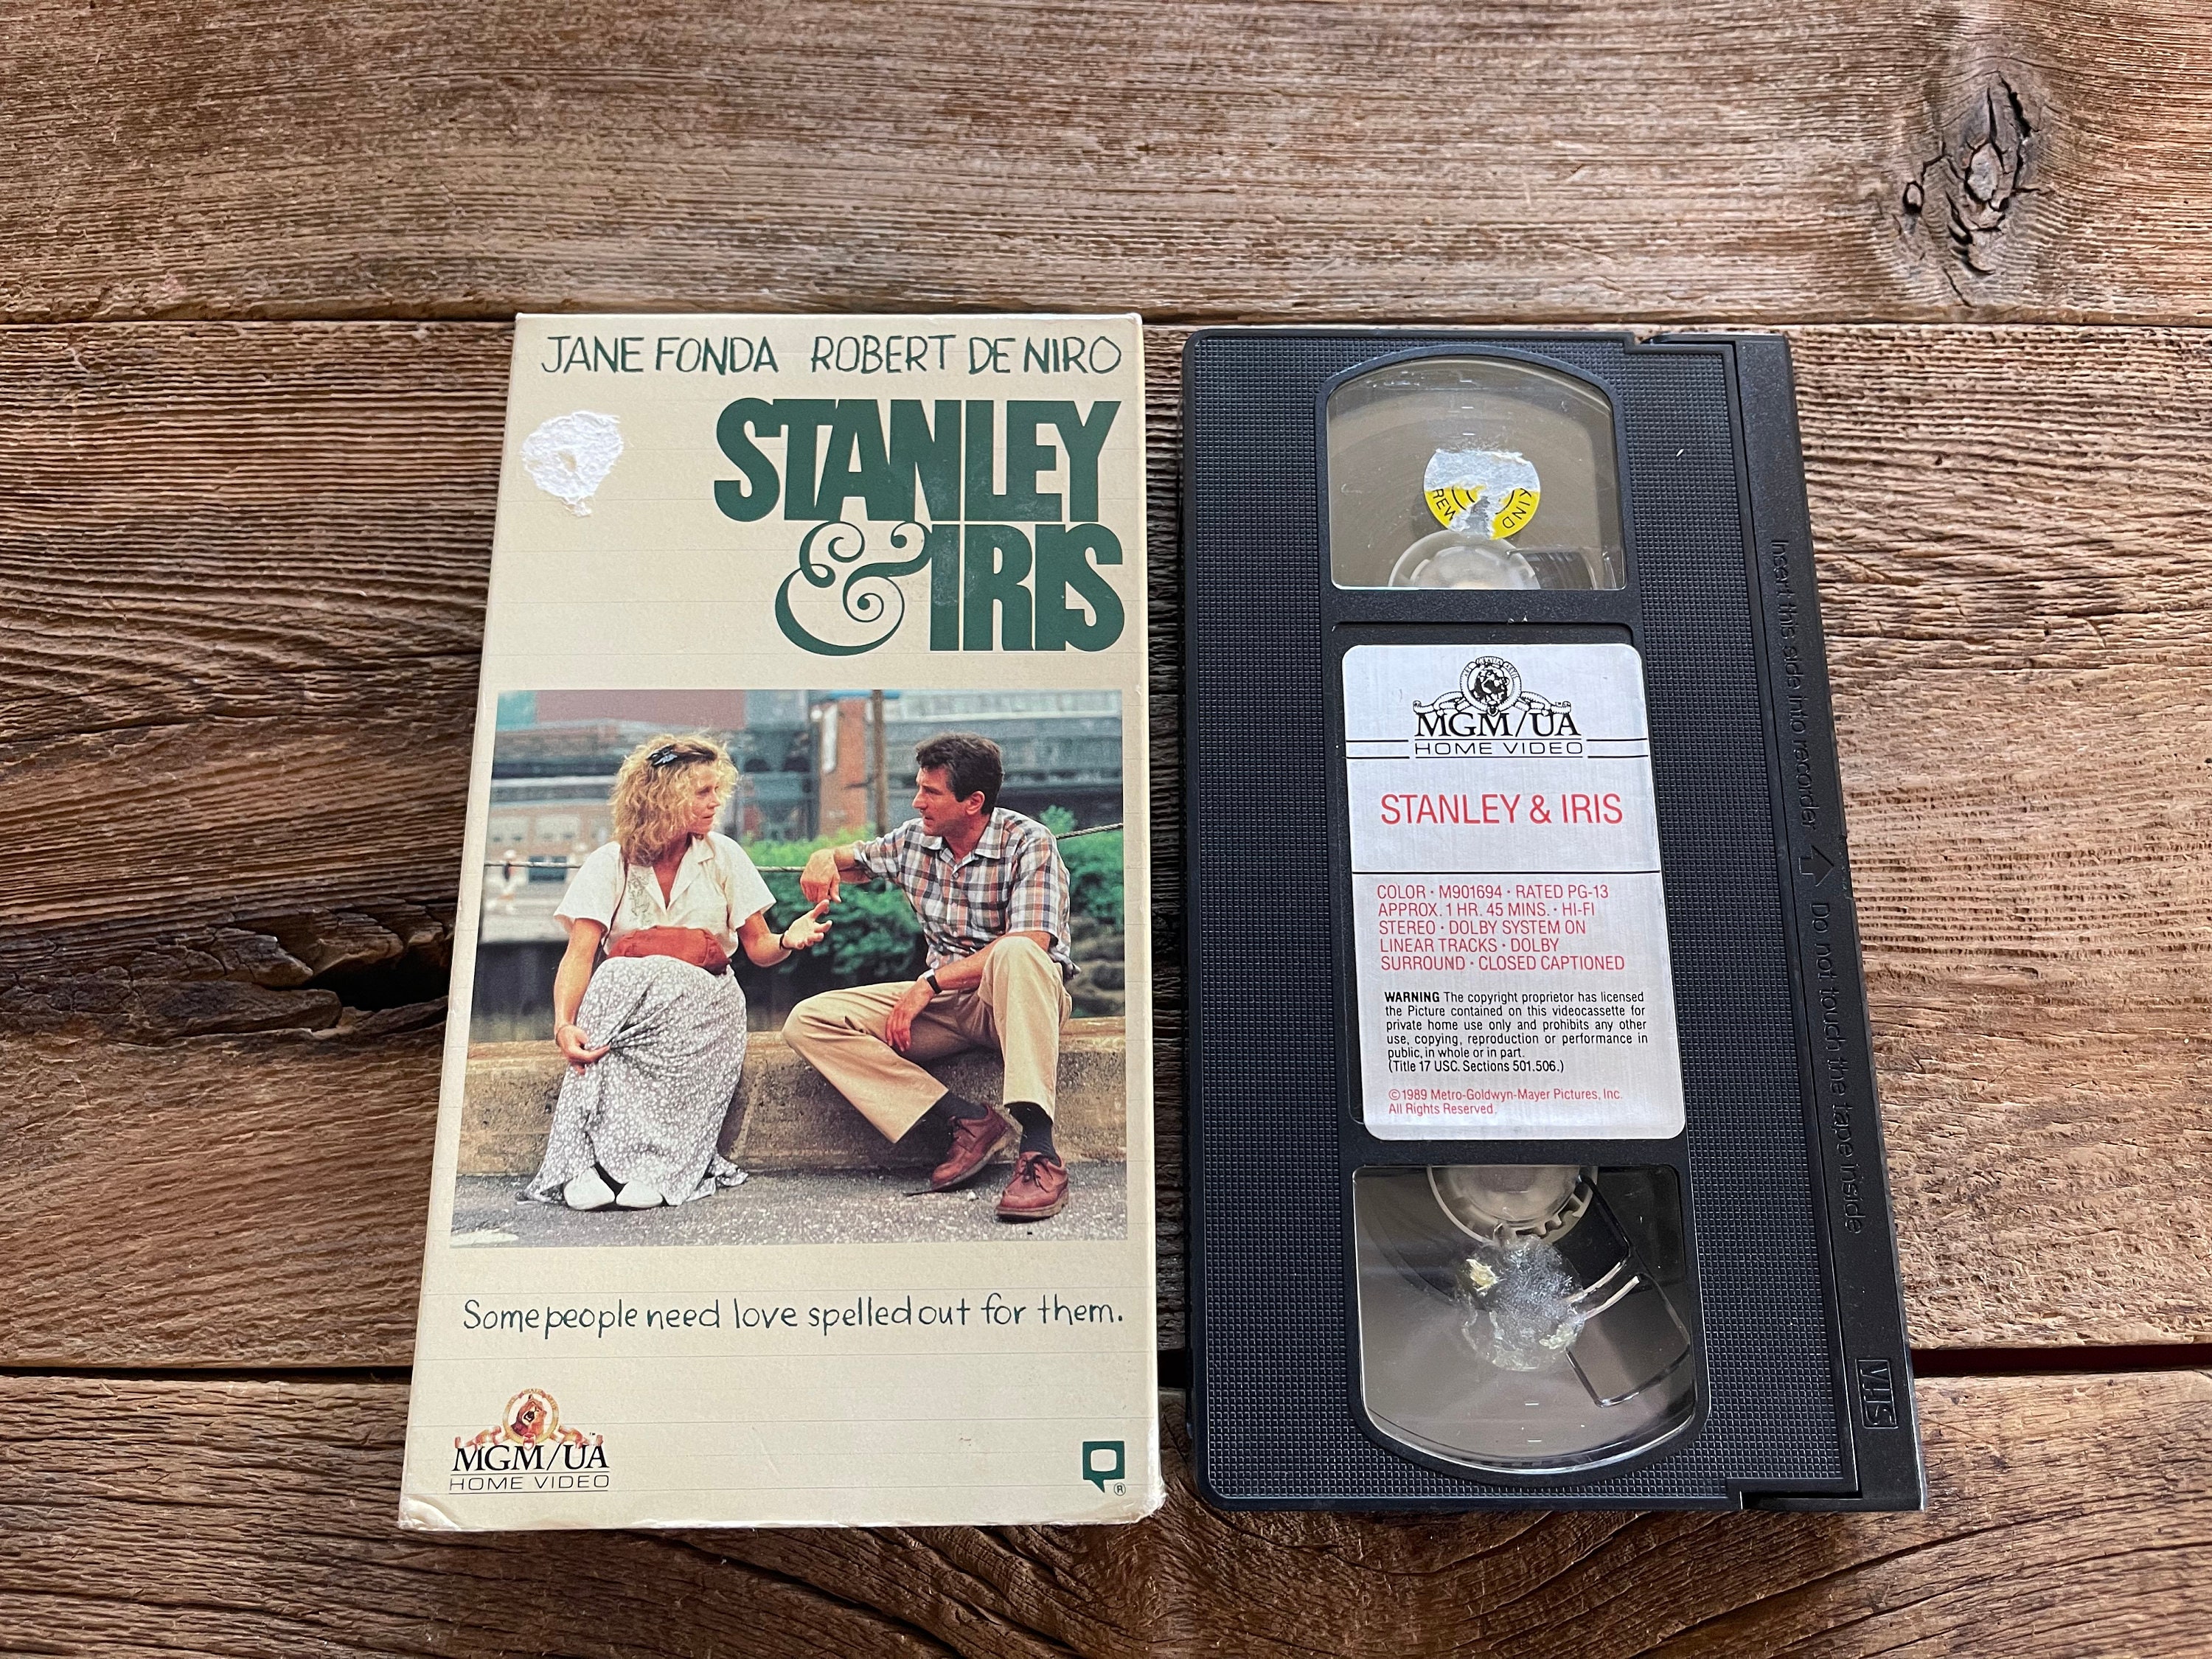 Stanley & Iris (1989)